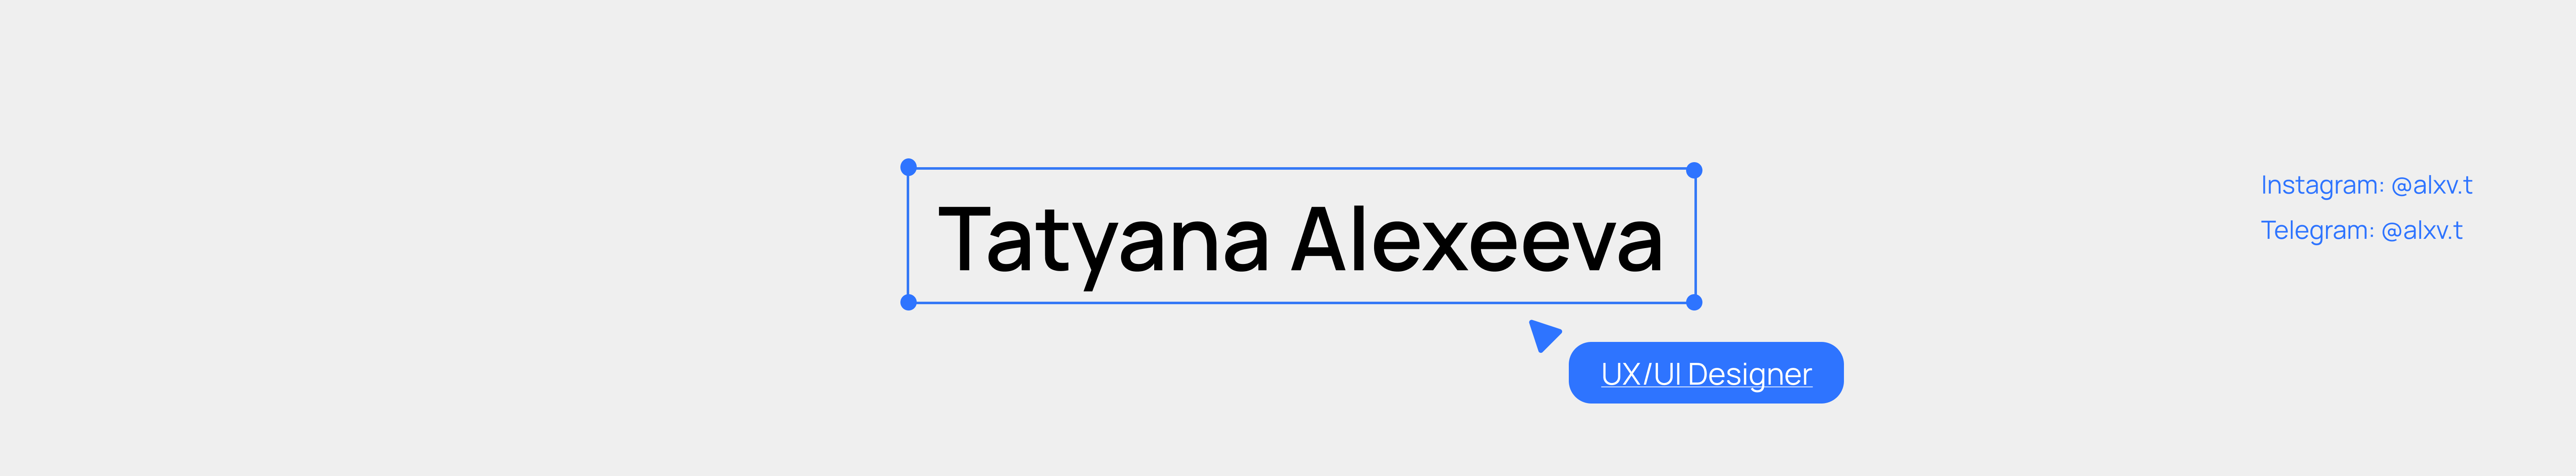 Tatyana Alexeeva's profile banner